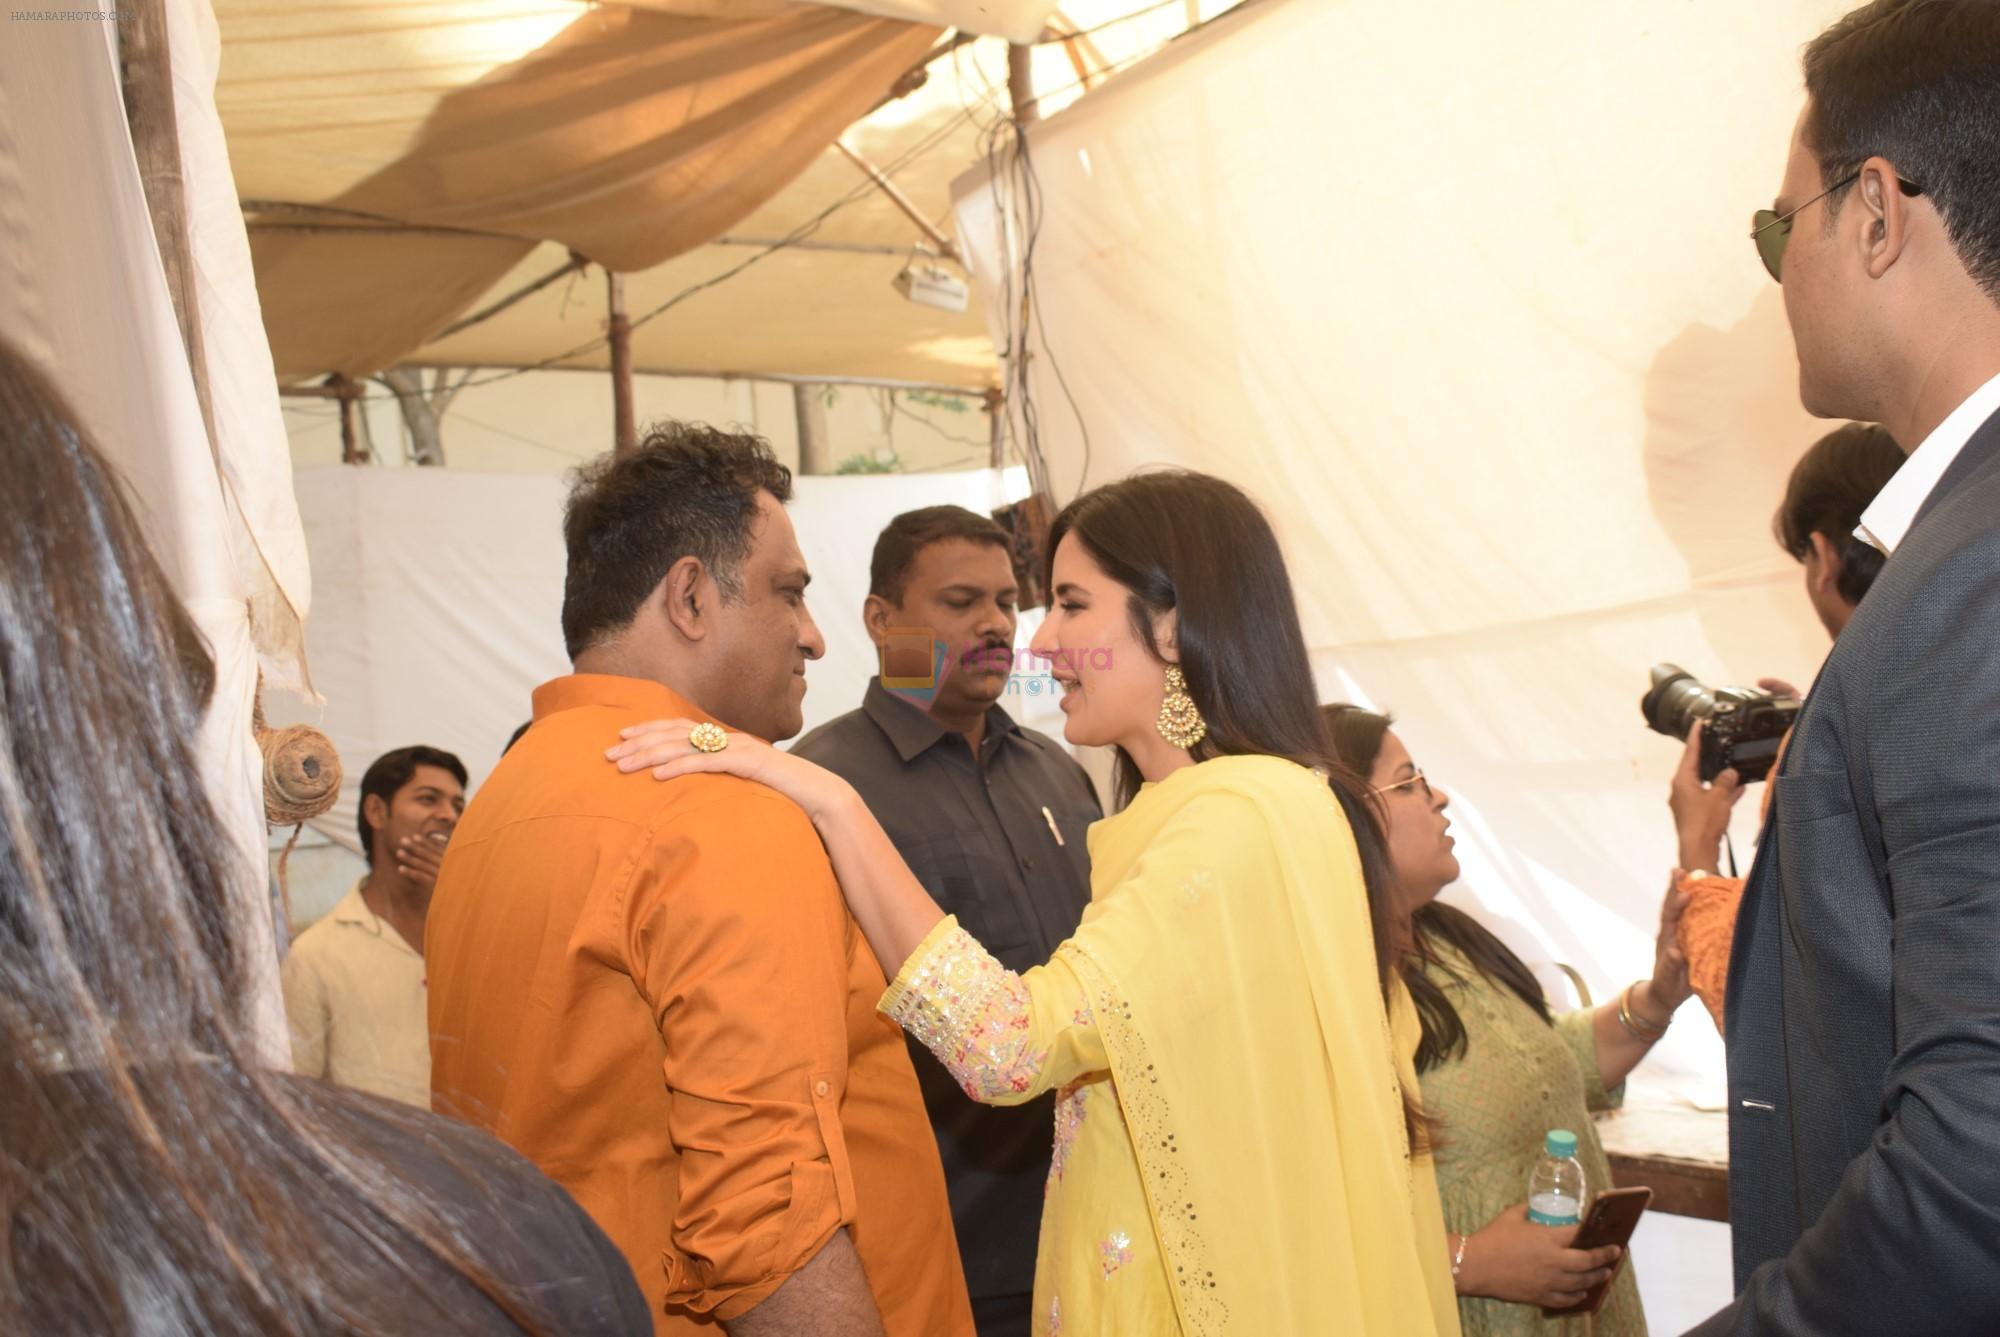 Katrina Kaif at Saraswati pujan at Anurag Basu's house in goregaon on 10th Feb 2019